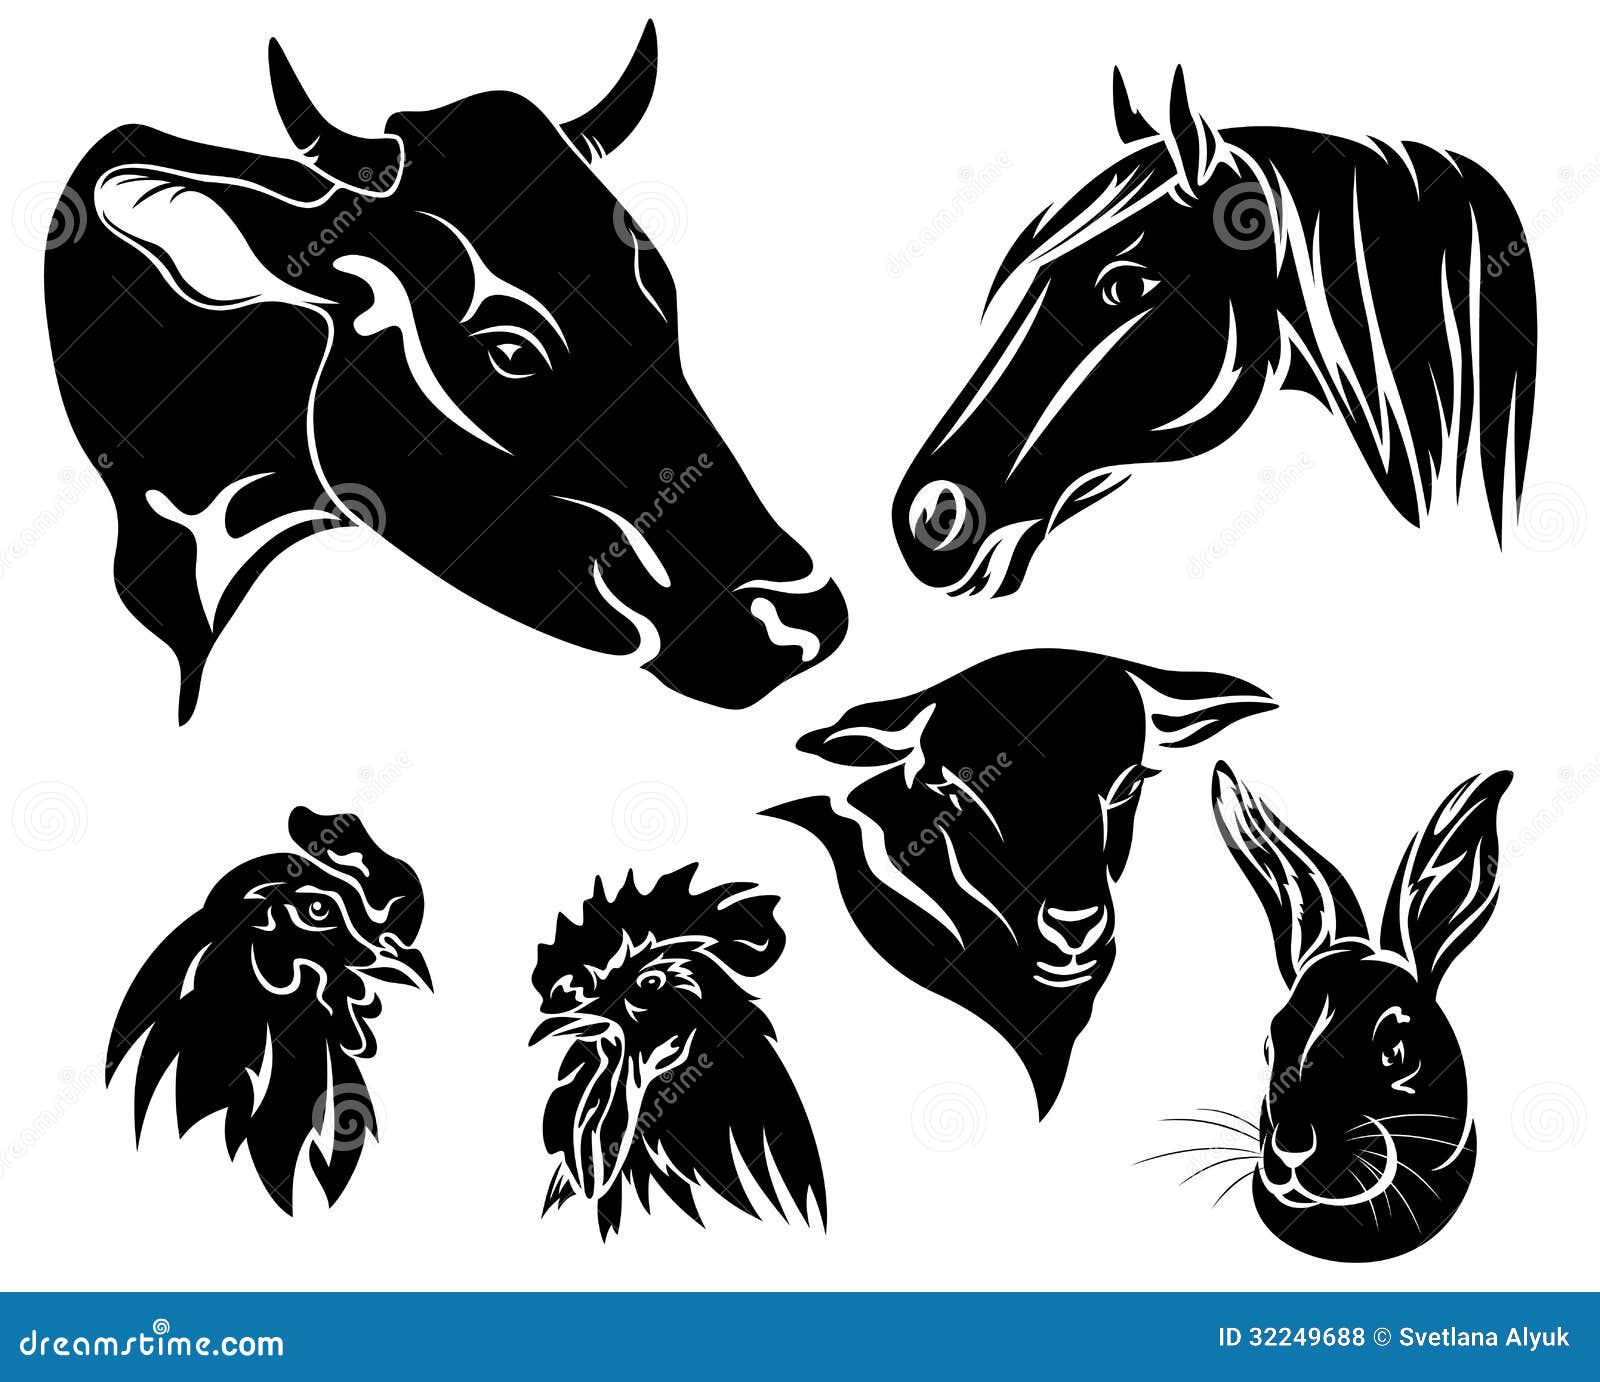 Farm animals vector stock vector. Illustration of ...